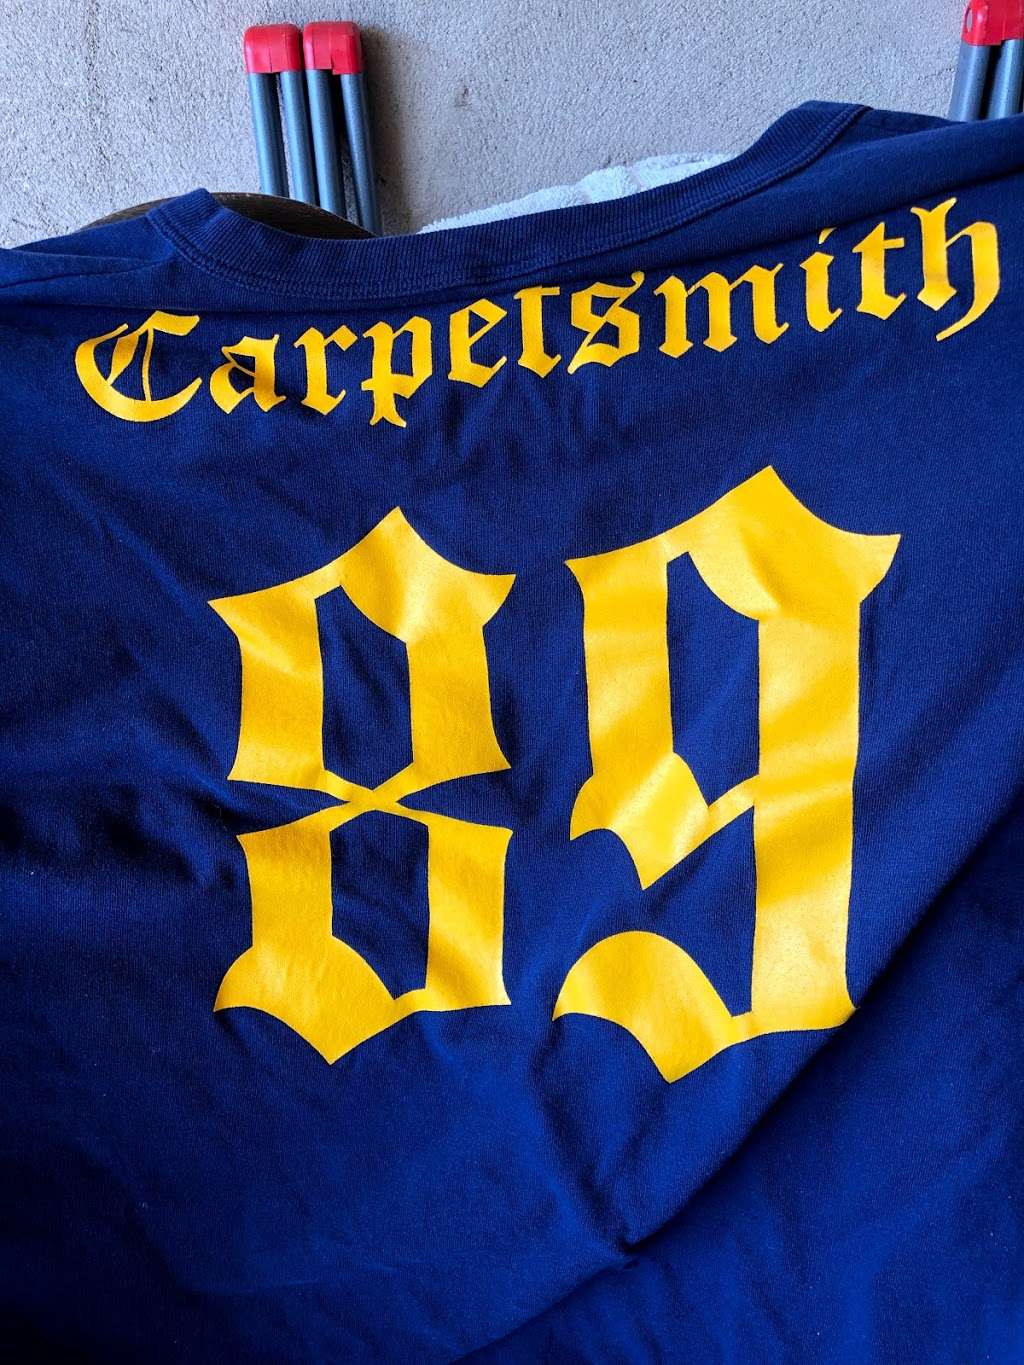 Carpetsmith Inc. | 607 County Line Rd, Huntingdon Valley, PA 19006 | Phone: (215) 338-2886